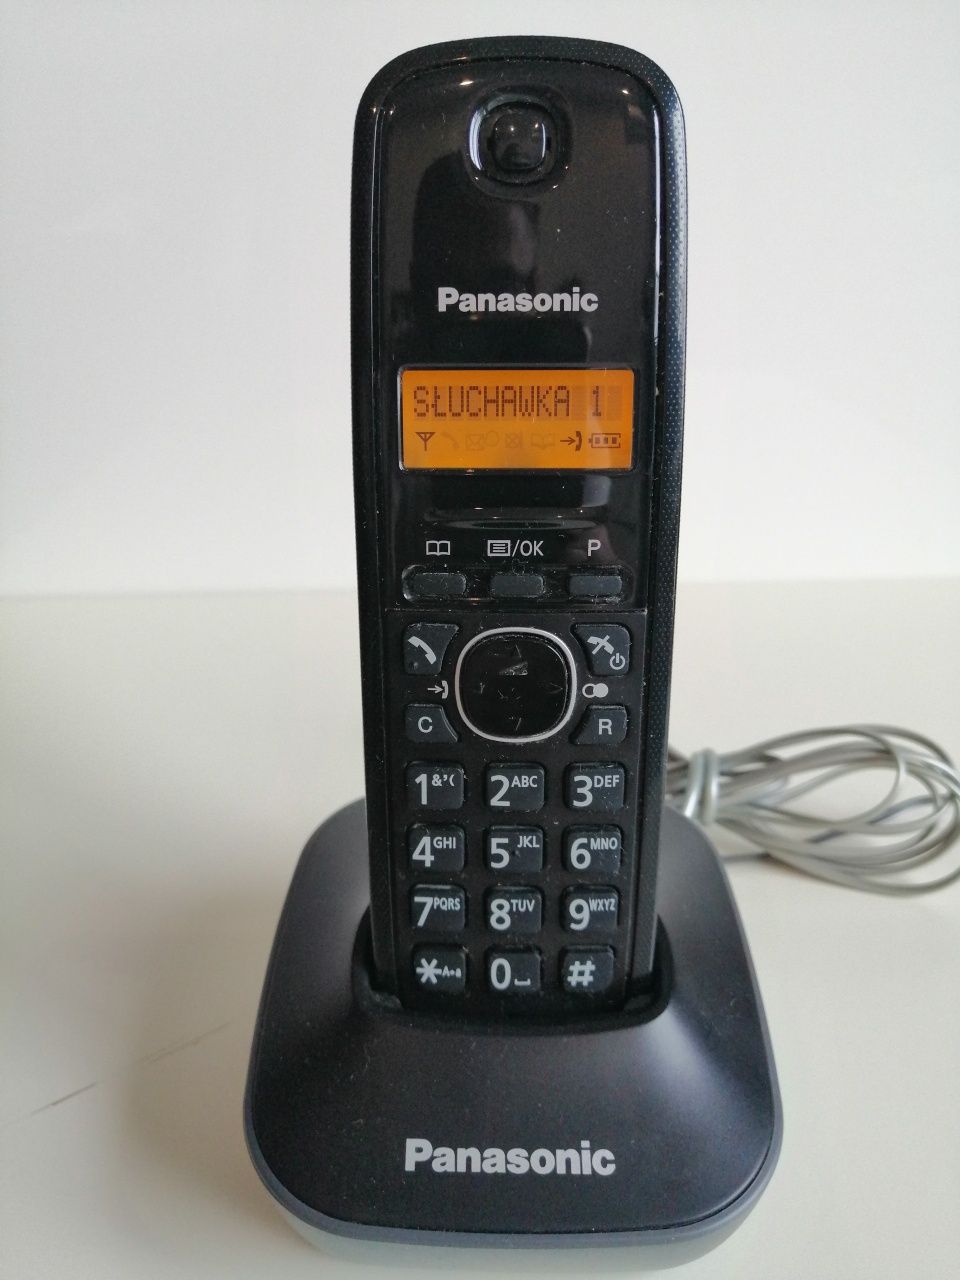 Telefon stacjonarny przenośny Panasonic.